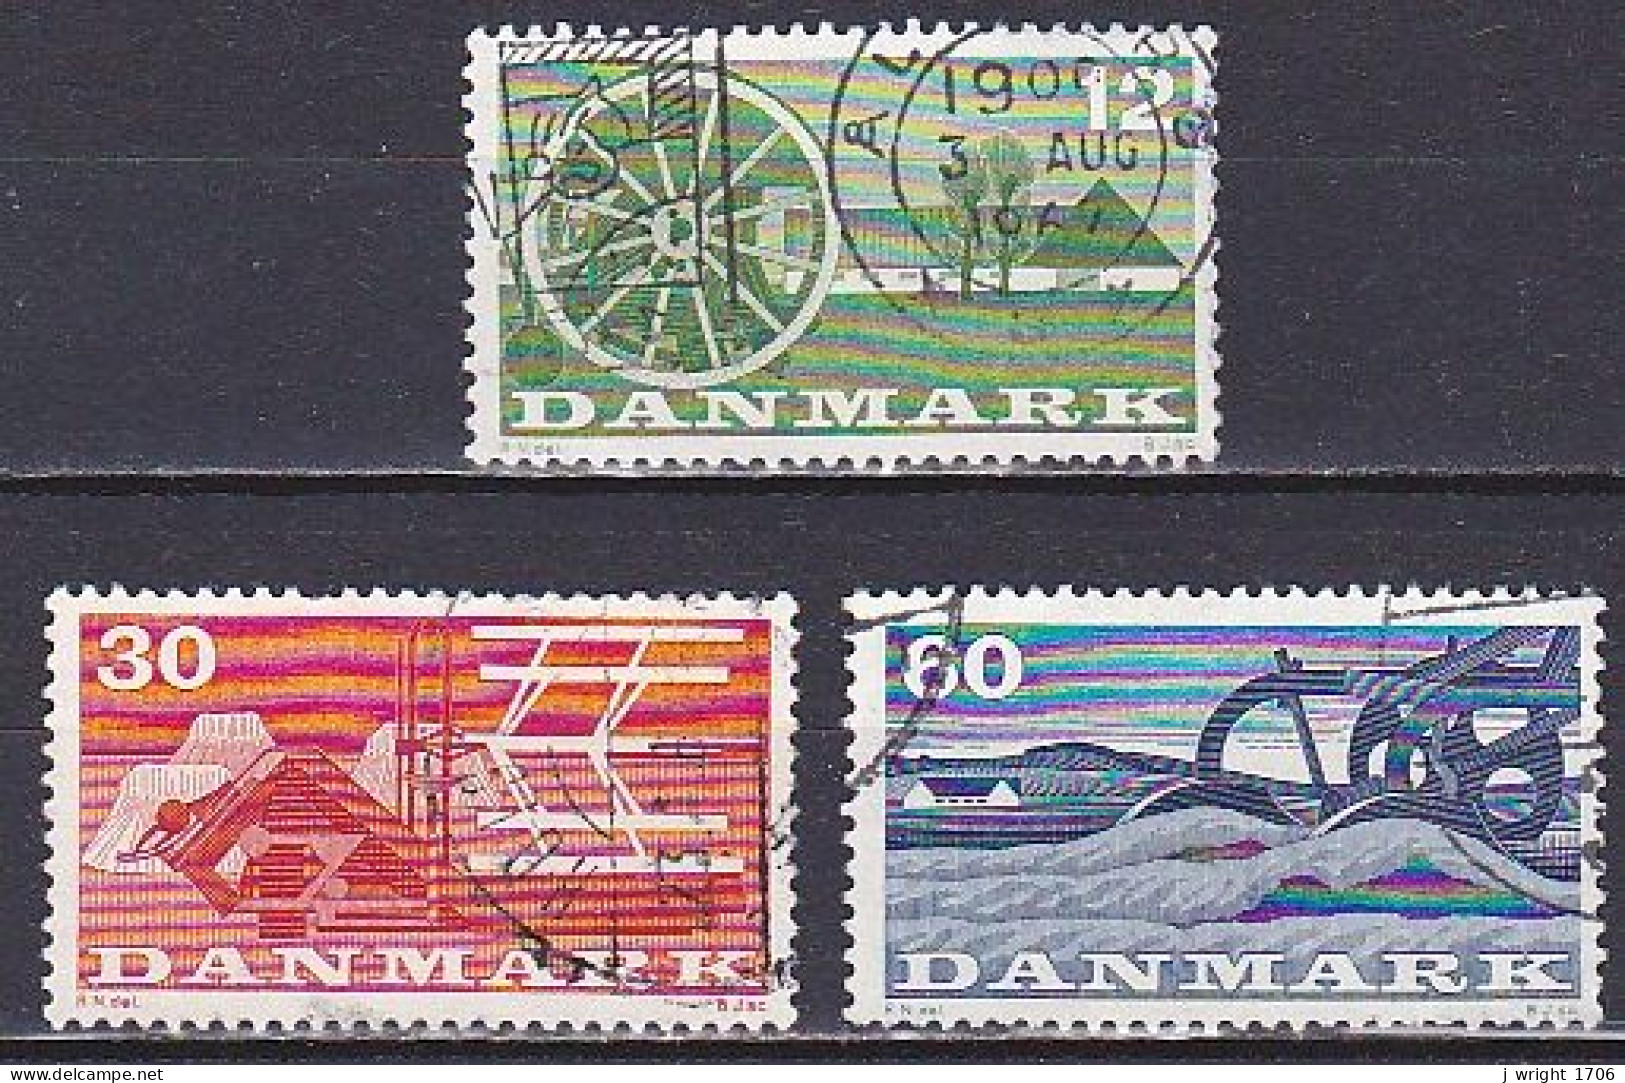 Denmark, 1960, Danish Food Fair, Set, USED - Used Stamps